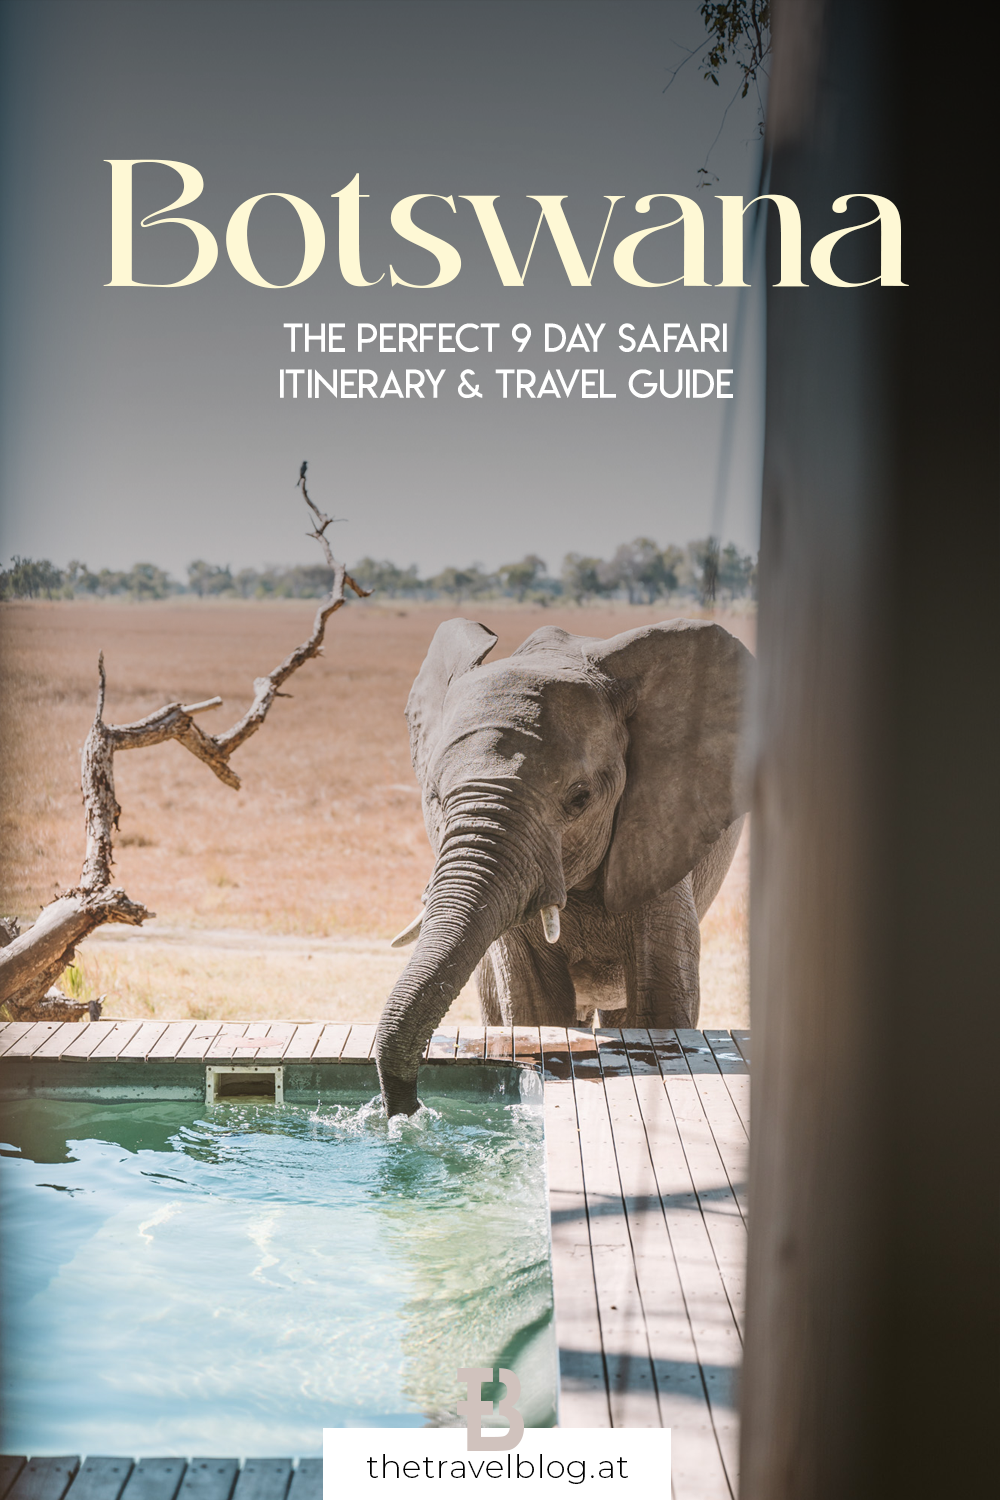 Botswana travel guide: An expert guide for a 9 day safari in Botswana